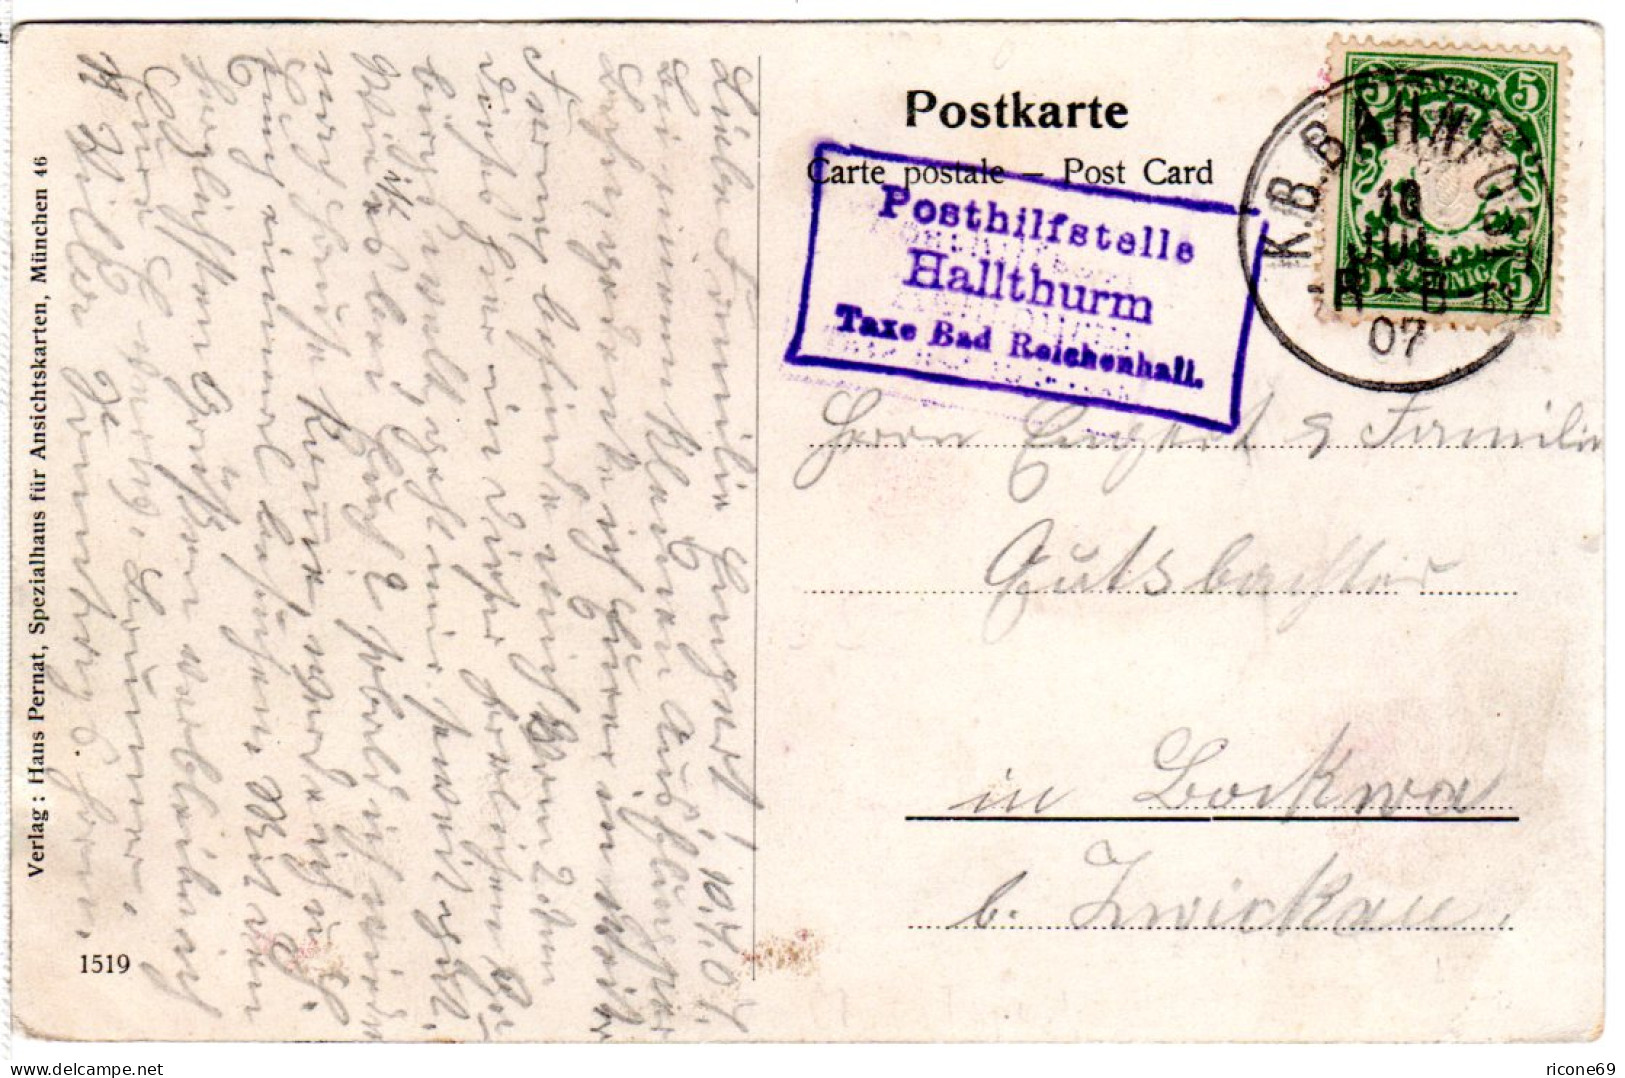 Bayern 1907, Posthilfstelle HALLTHURM Taxe Bad Reichenhall Auf Farb-AK M. 5 Pf. - Lettres & Documents